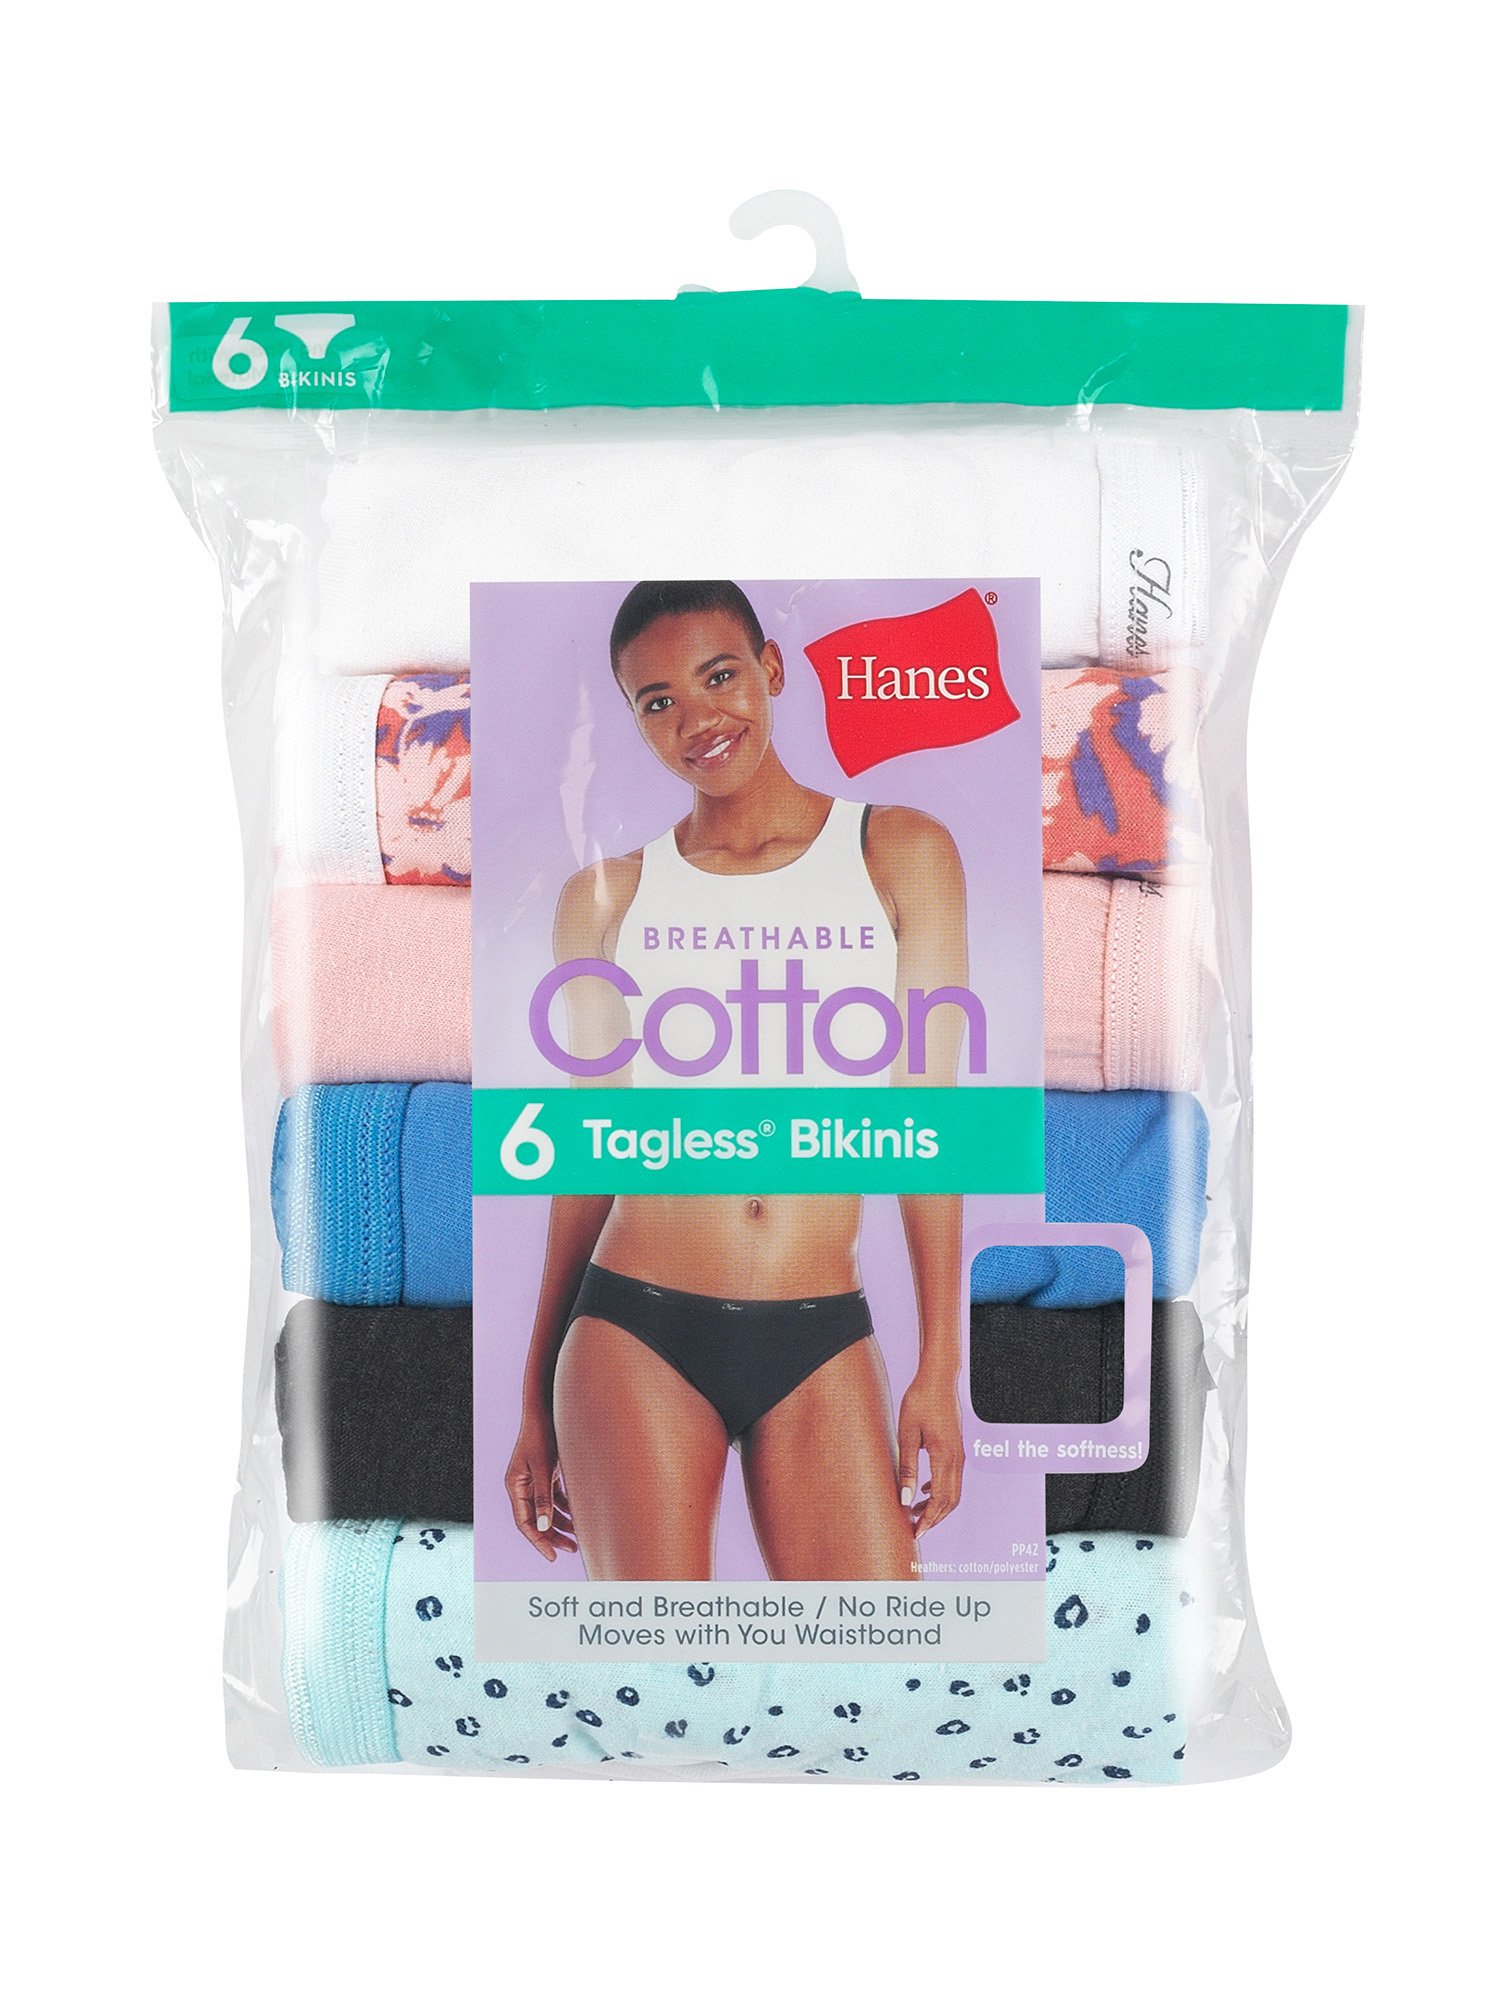 Hanes Women's Cotton Bikini Underwear, 6-Pack - image 2 of 7